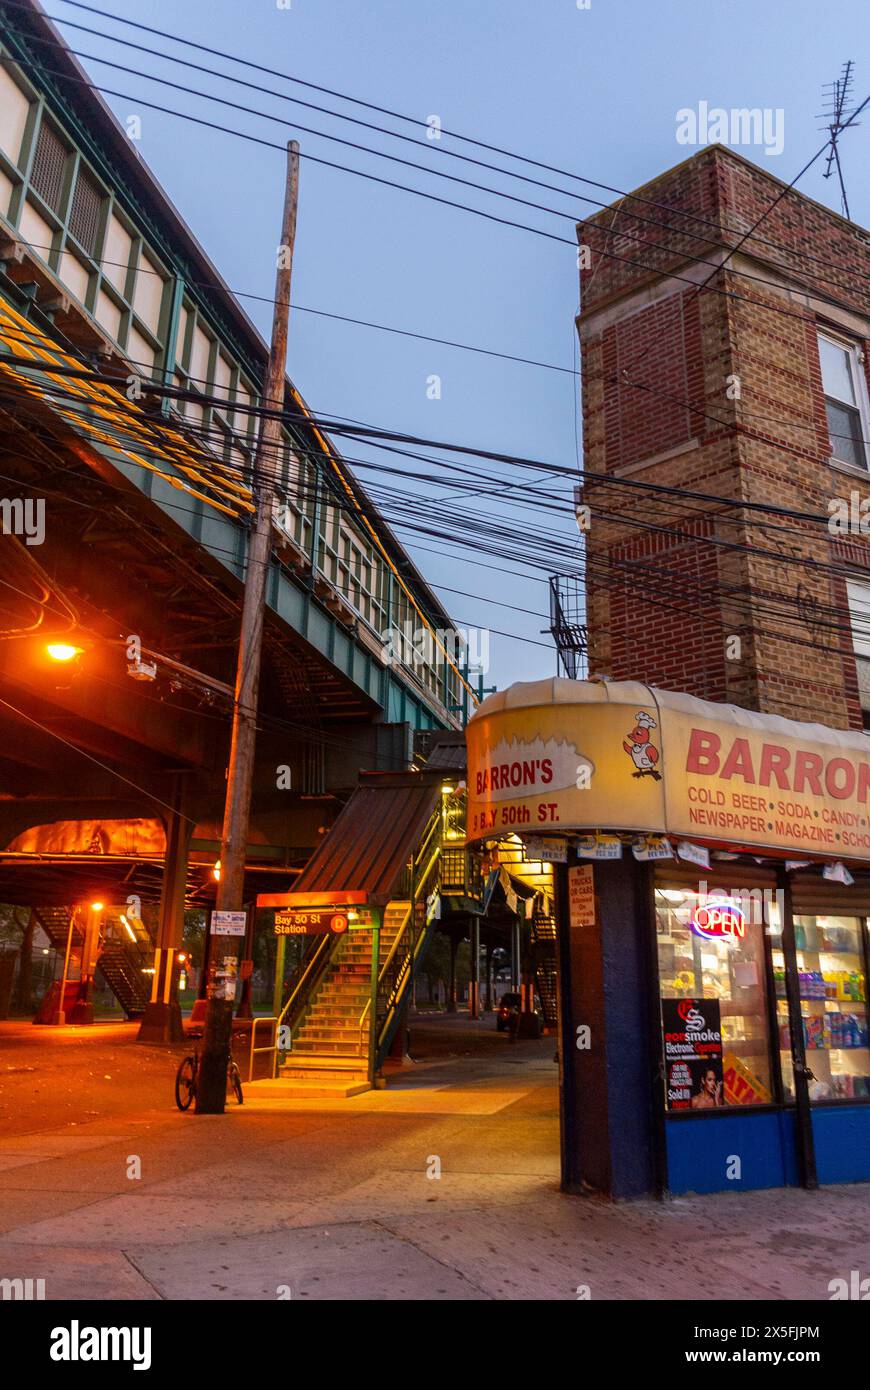 New York City, NY, USA, Retro Grocery Store Fronts, Street Scenes in Brooklyn, Gravesend Neighborhood, Subway Overpass, Night Stock Photo